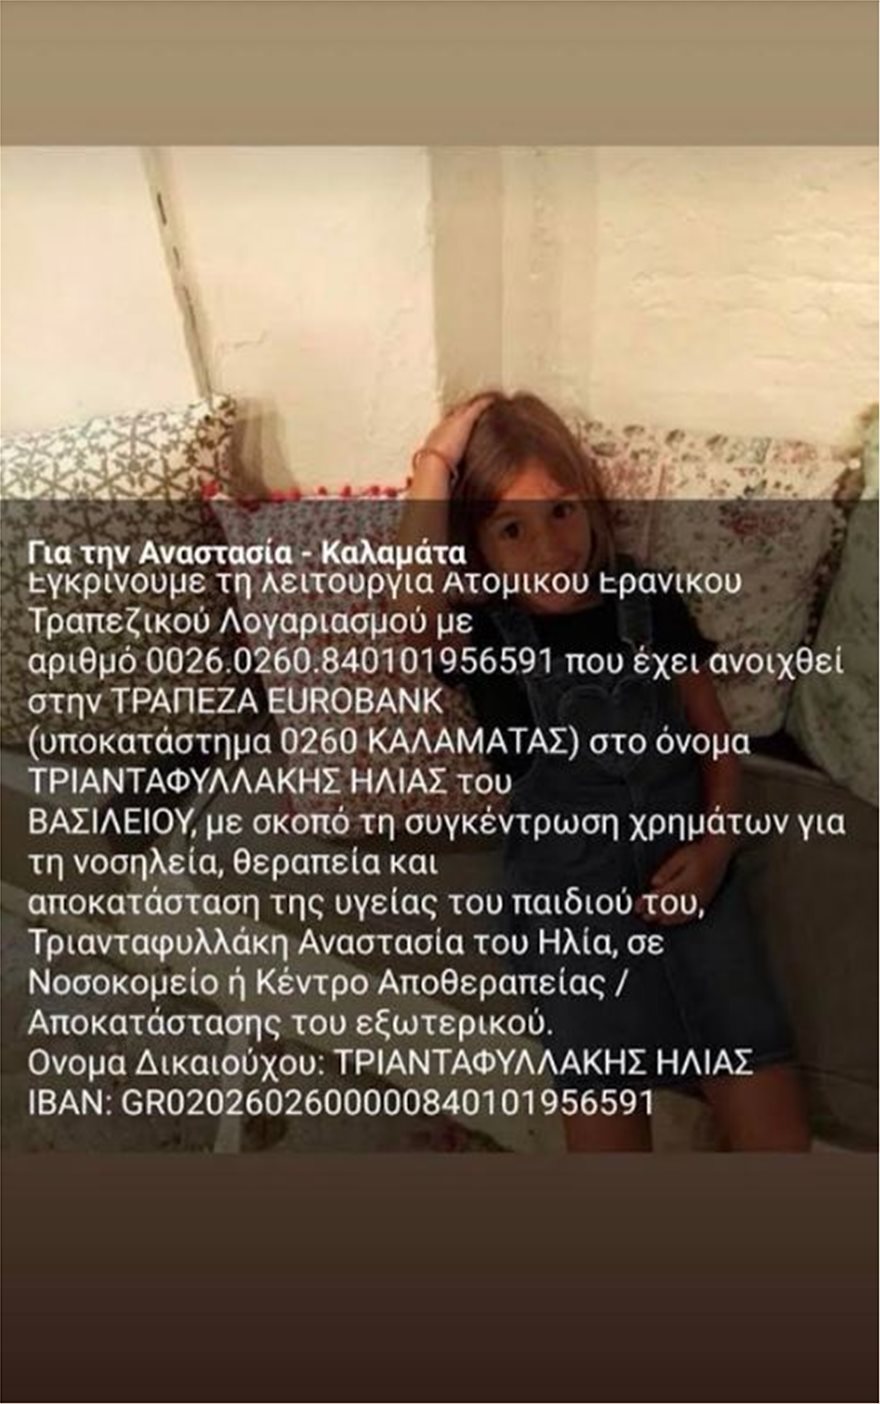 Support Anastasia: Ας σταθούμε όλοι δίπλα στη μικρή Αναστασία που πάσχει από καρκίνο - Φωτογραφία 2